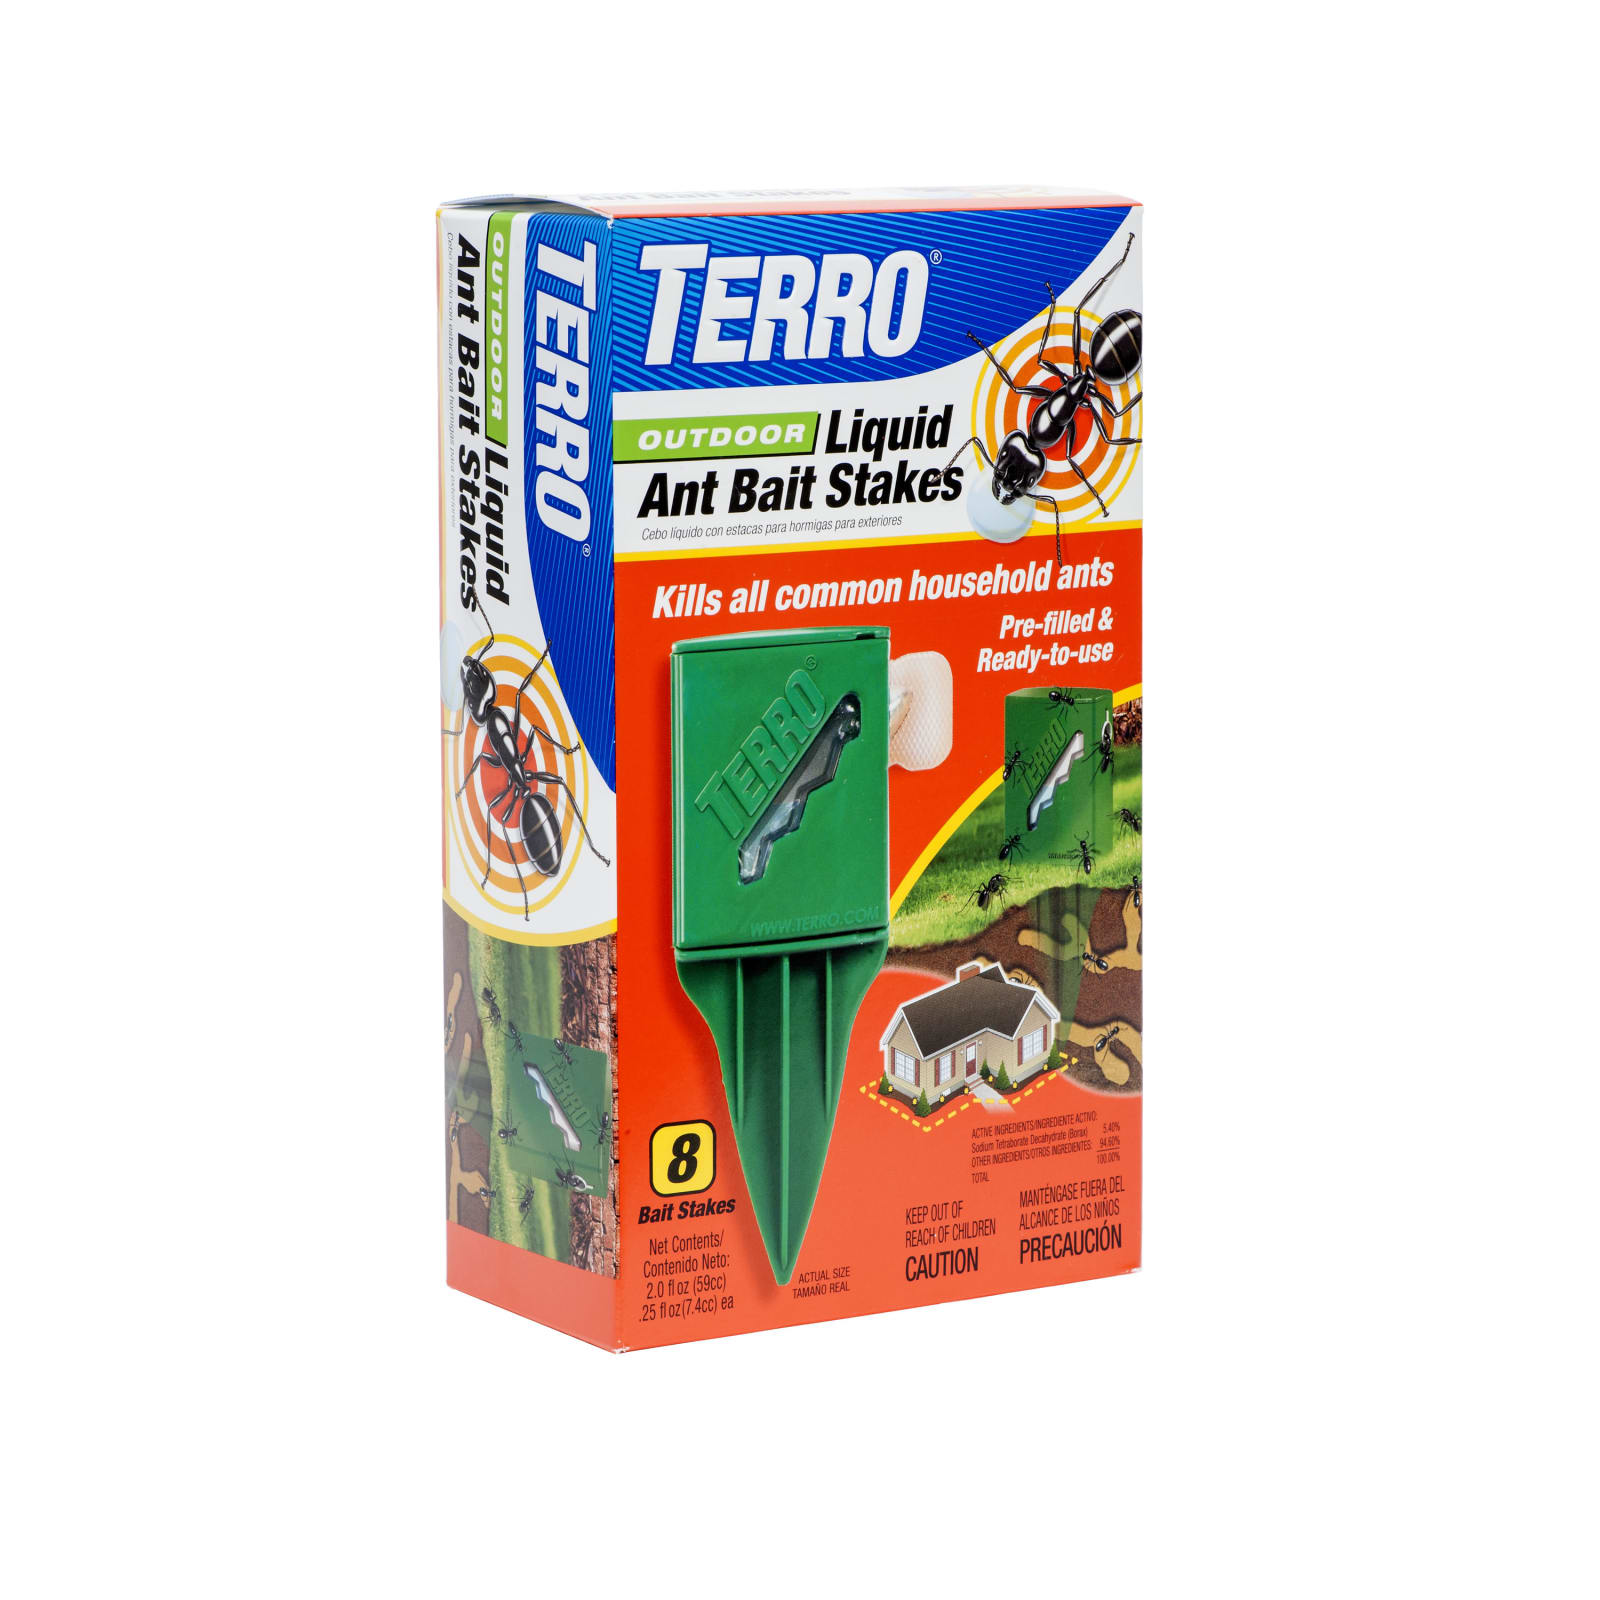 Outdoor Liquid Ant Bait Stakes - 8 Pk by Terro at Fleet Farm